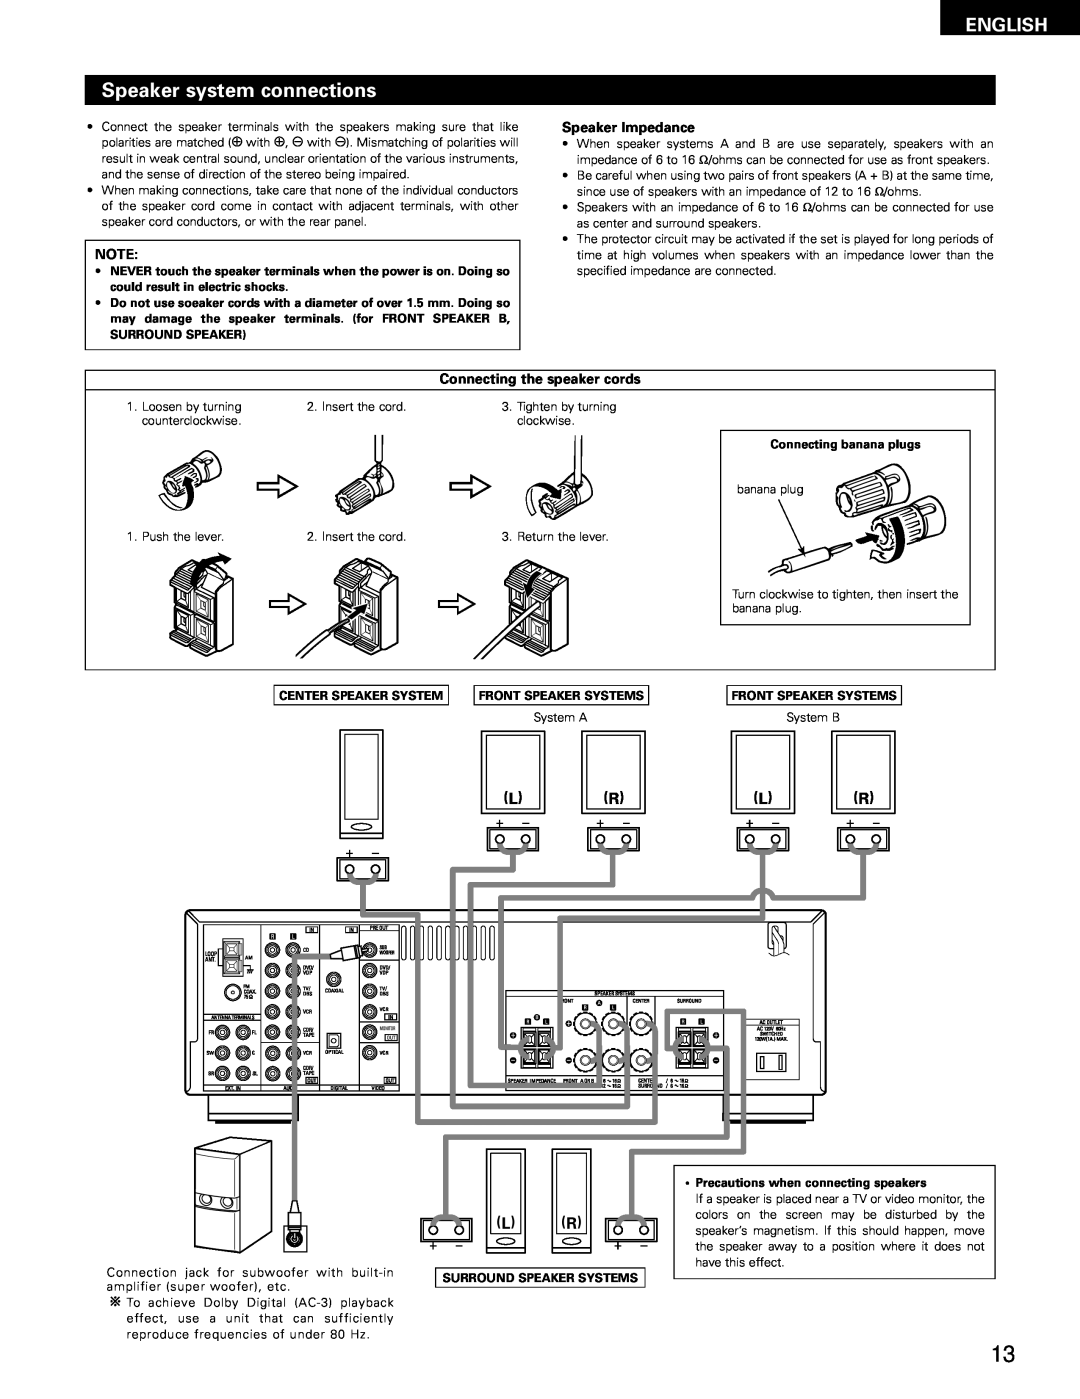 Denon AVR-1403, 483 Speaker system connections, English, Speaker Impedance, Connecting the speaker cords, Surround Speaker 